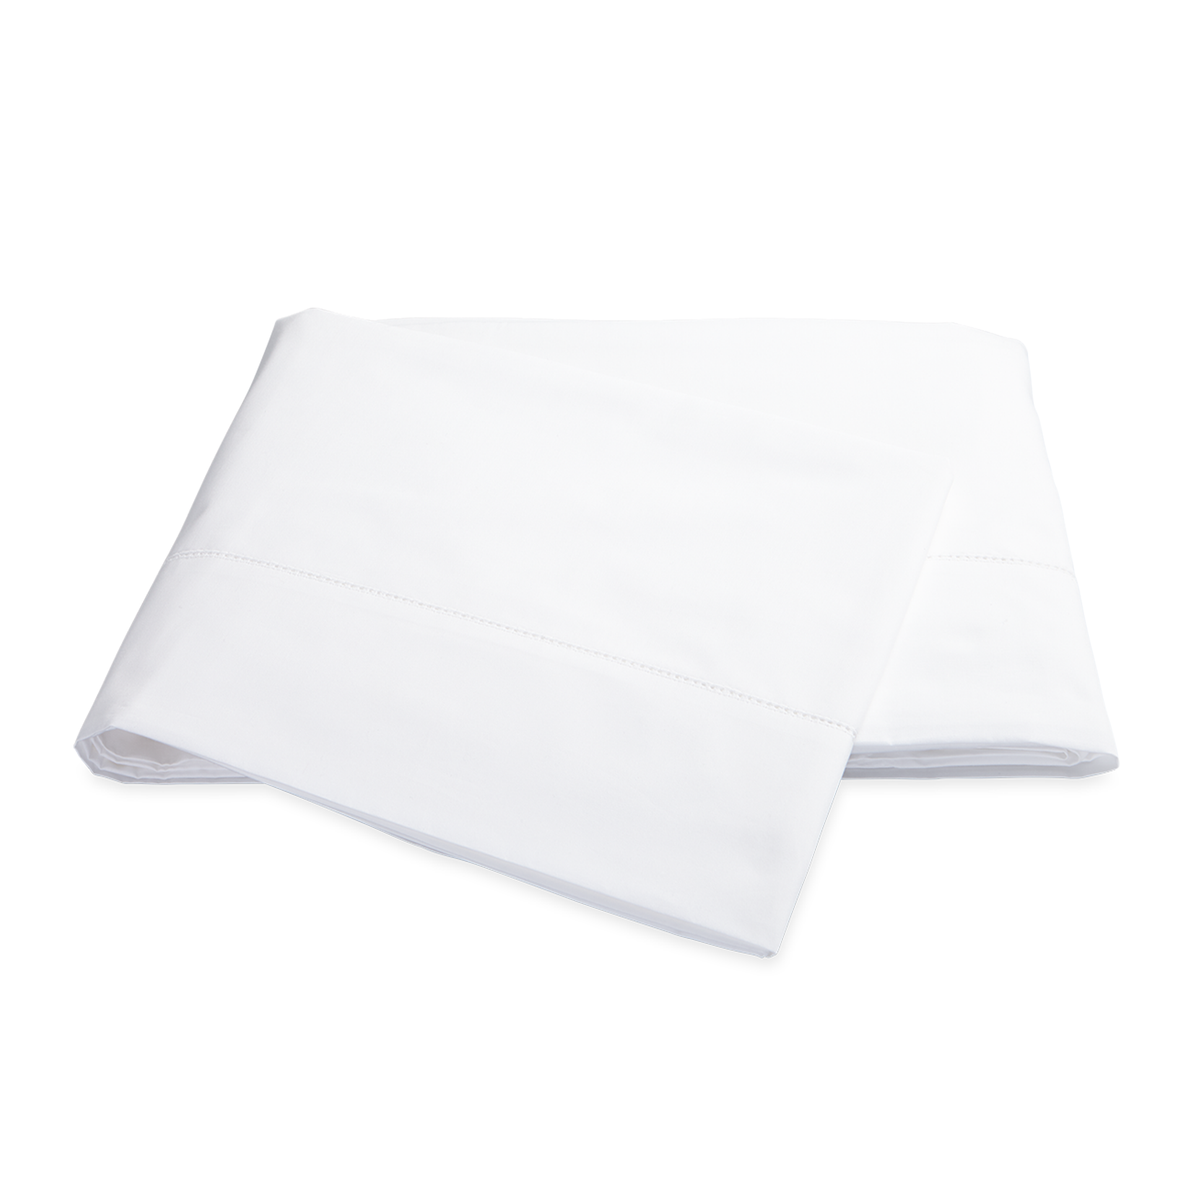 Flat Sheet of Matouk Milano Hemstitch Bedding in Color White